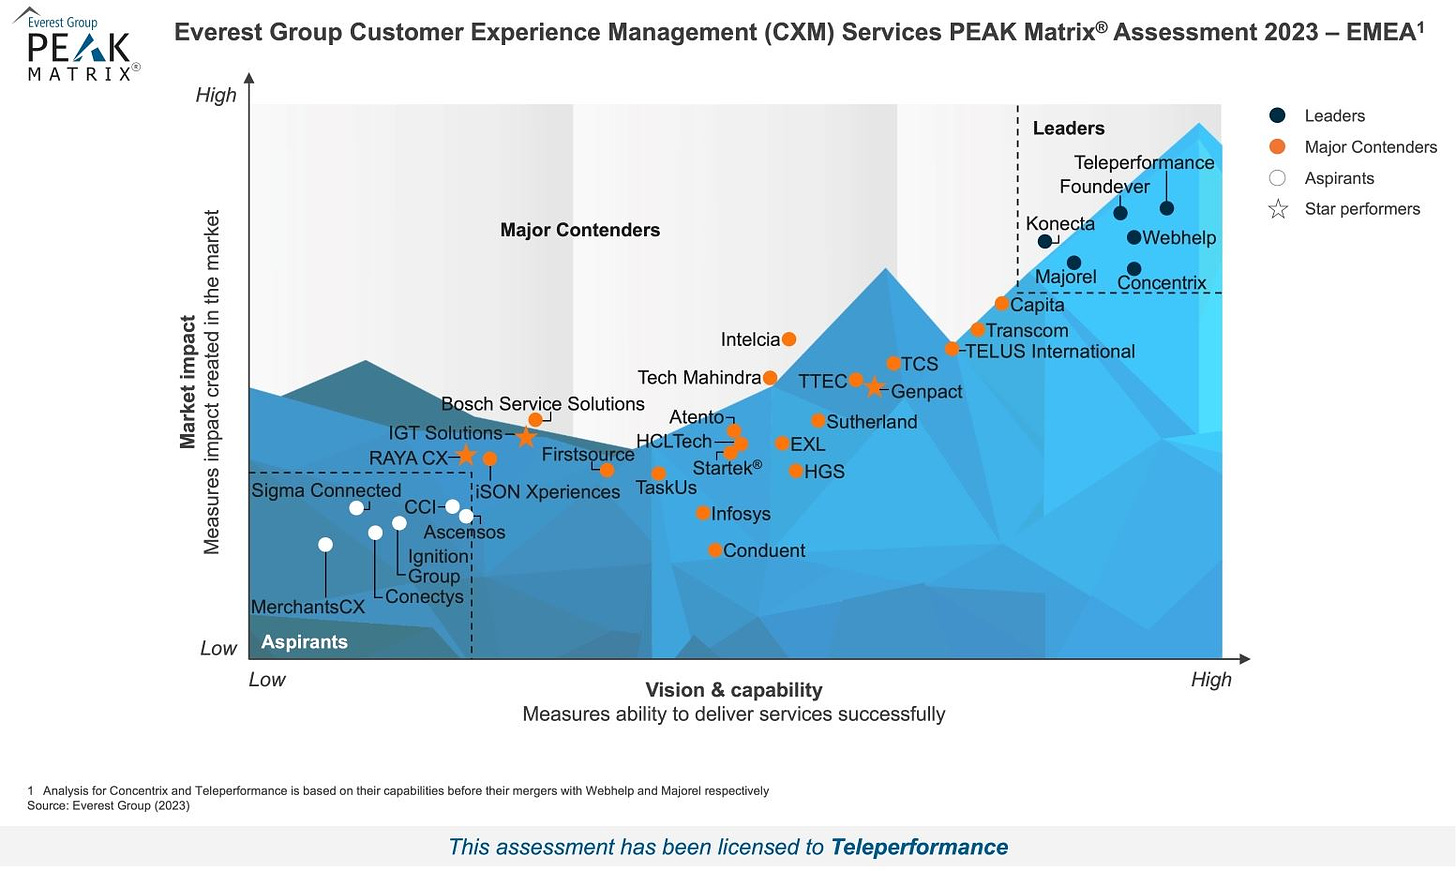 High Res PEAK 2023 Customer Experience Management (CXM) Services EMEA Teleperformance